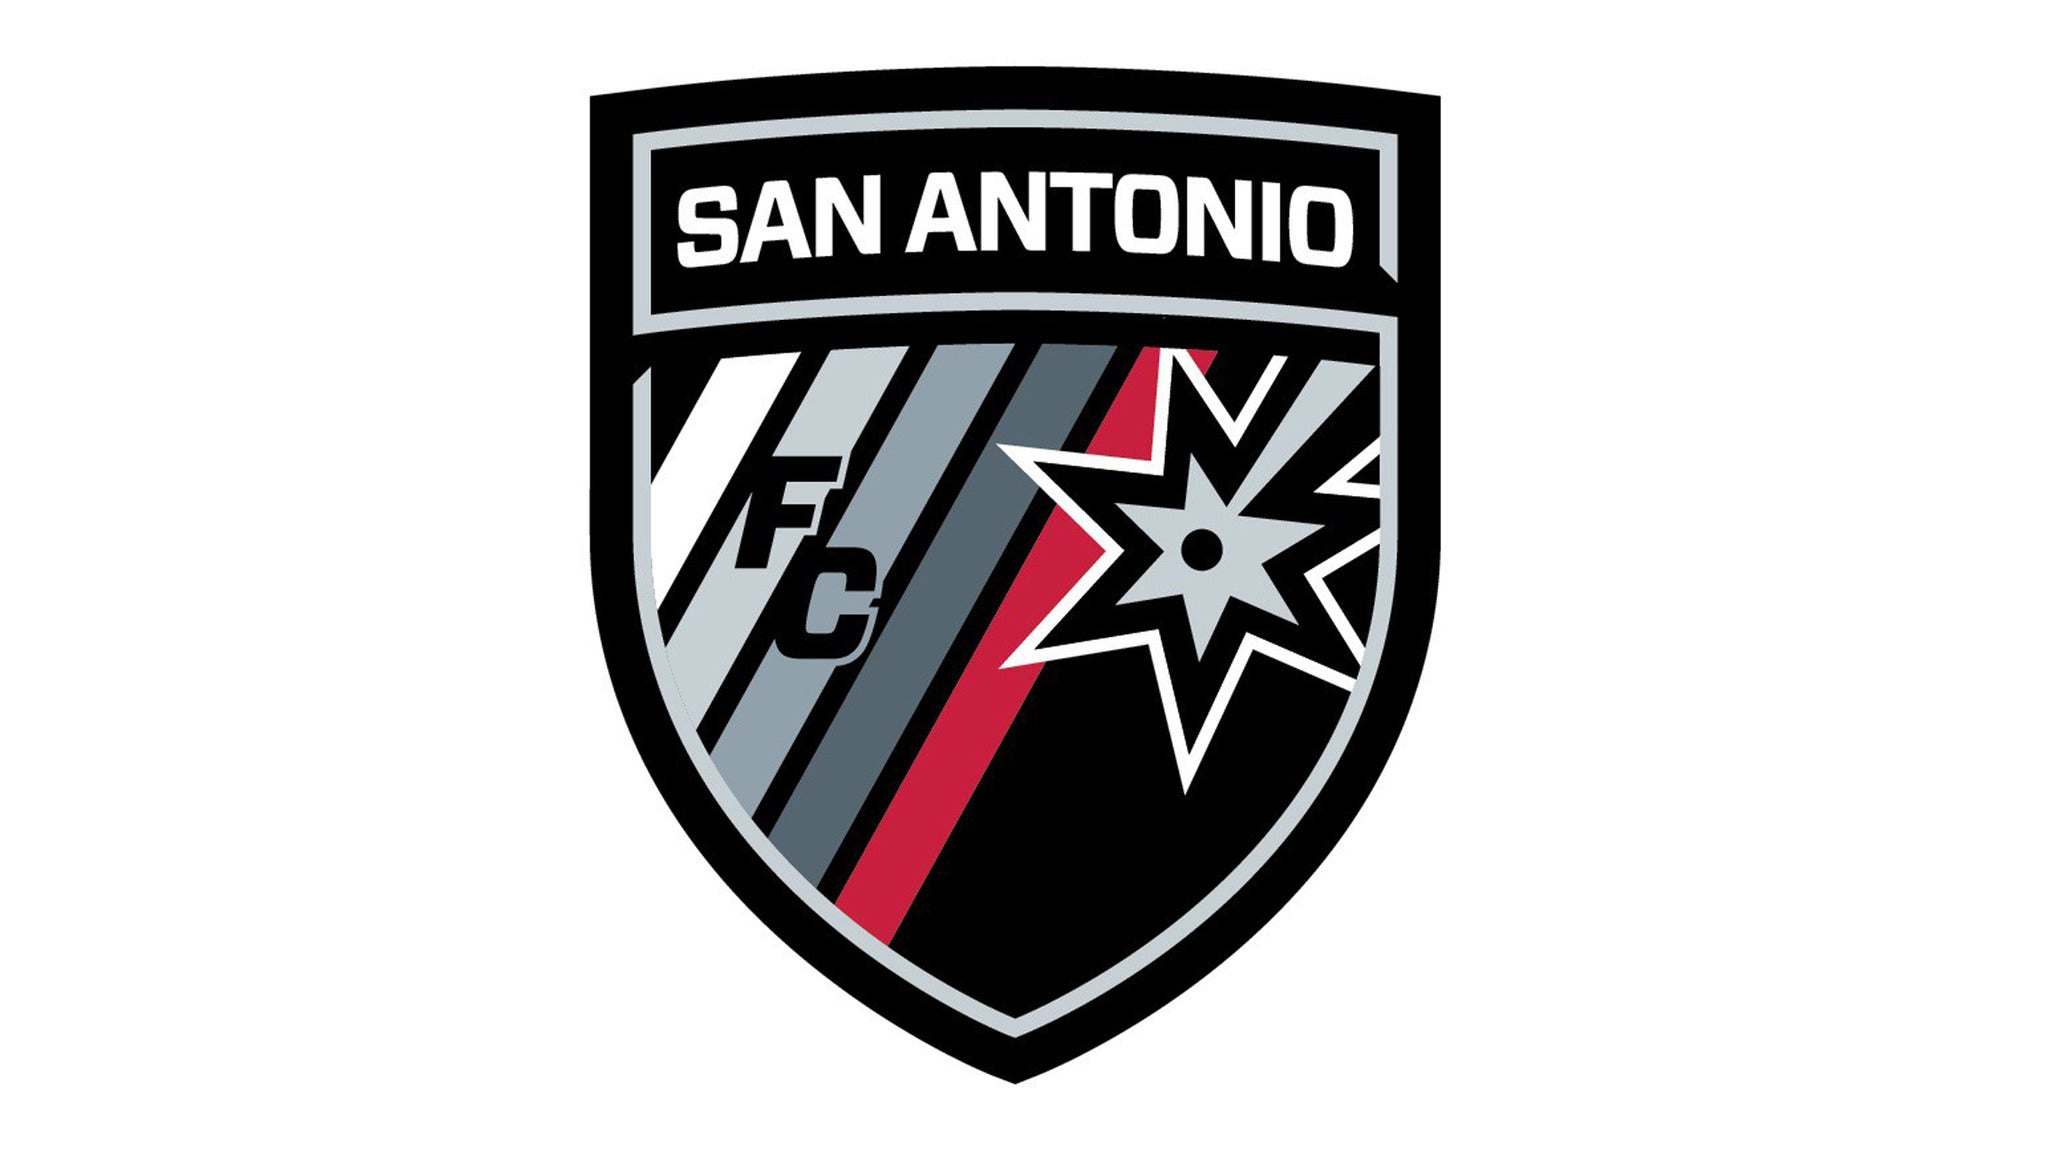 San Antonio FC vs. Austin Bold FC in San Antonio promo photo for Fan Club presale offer code